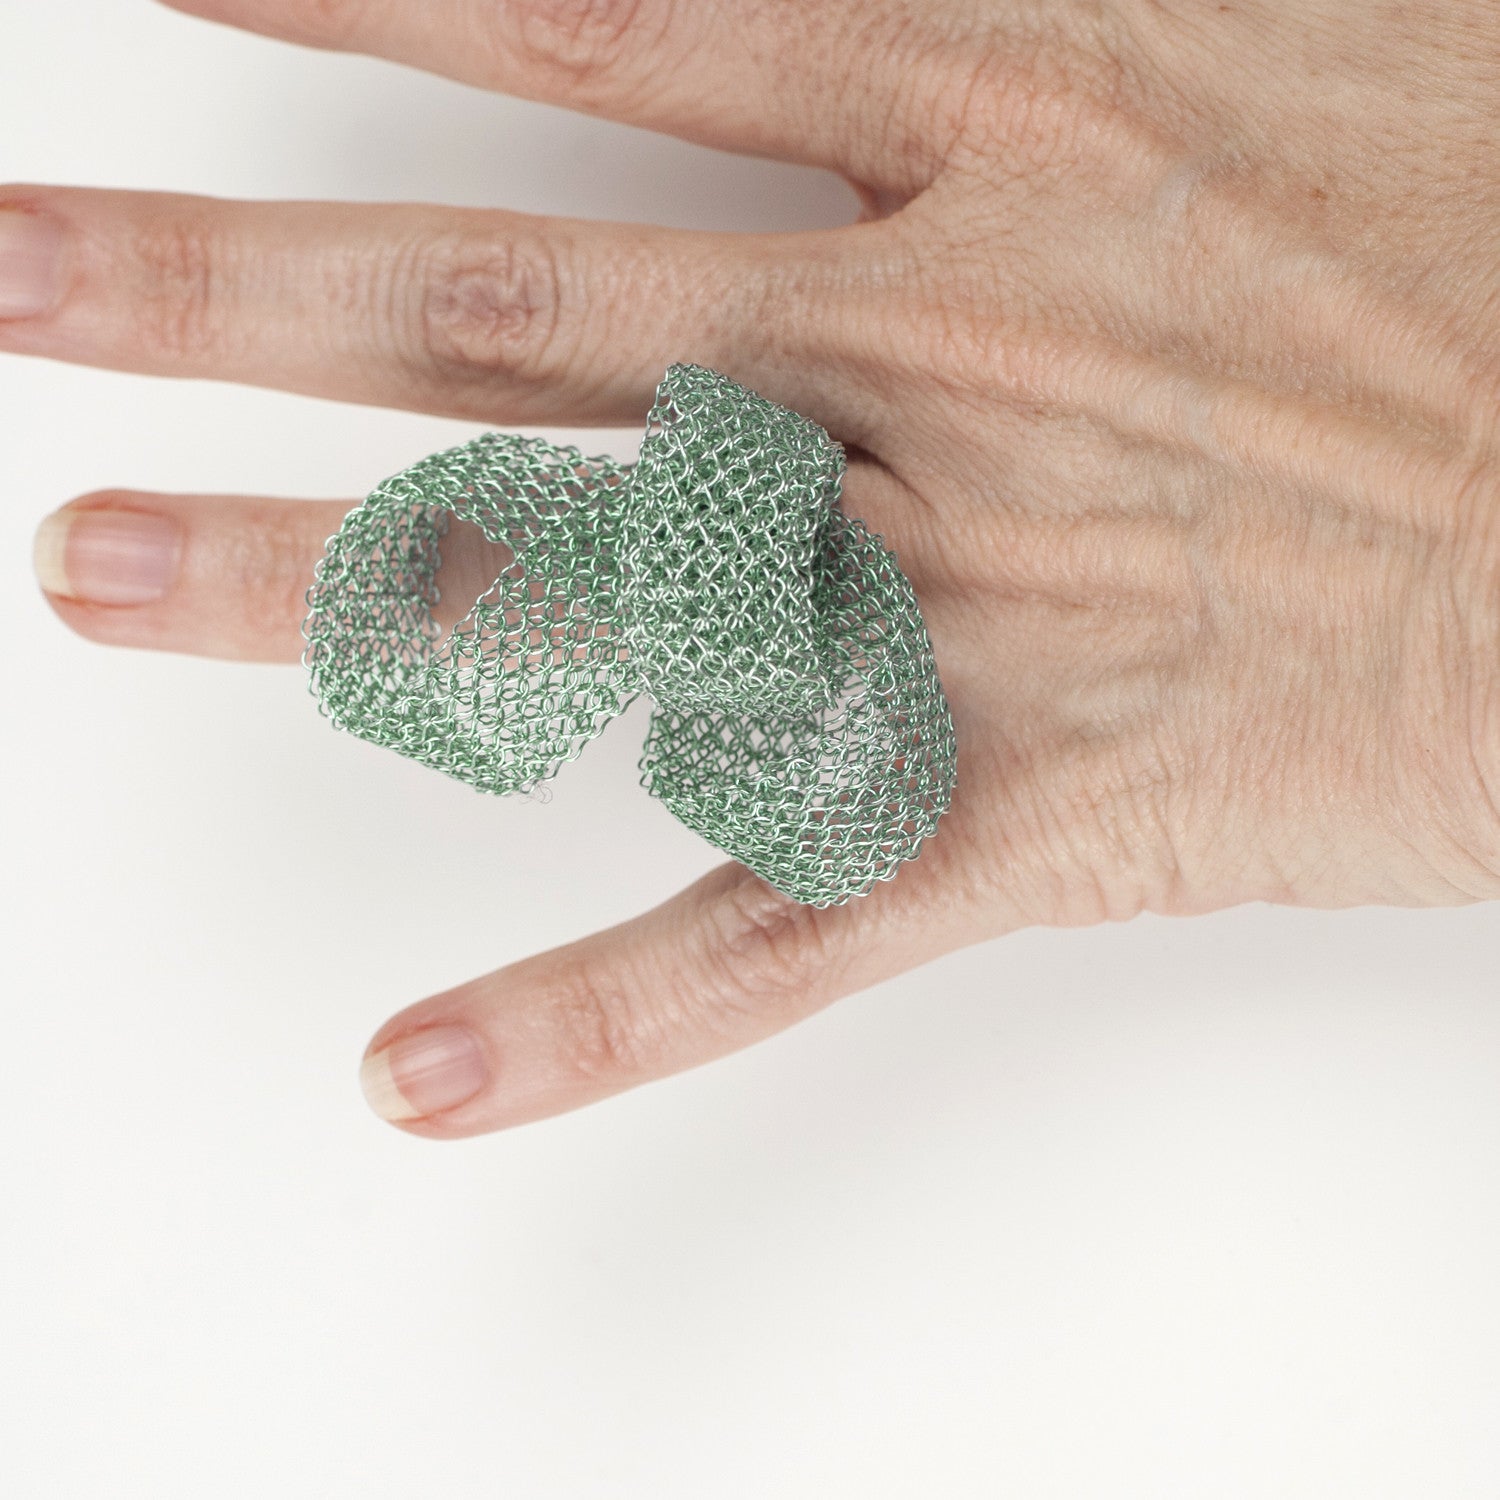 Crochet Lace Jewelry grace Statement Ring, Fiber Jewelry, Crochet Ring 